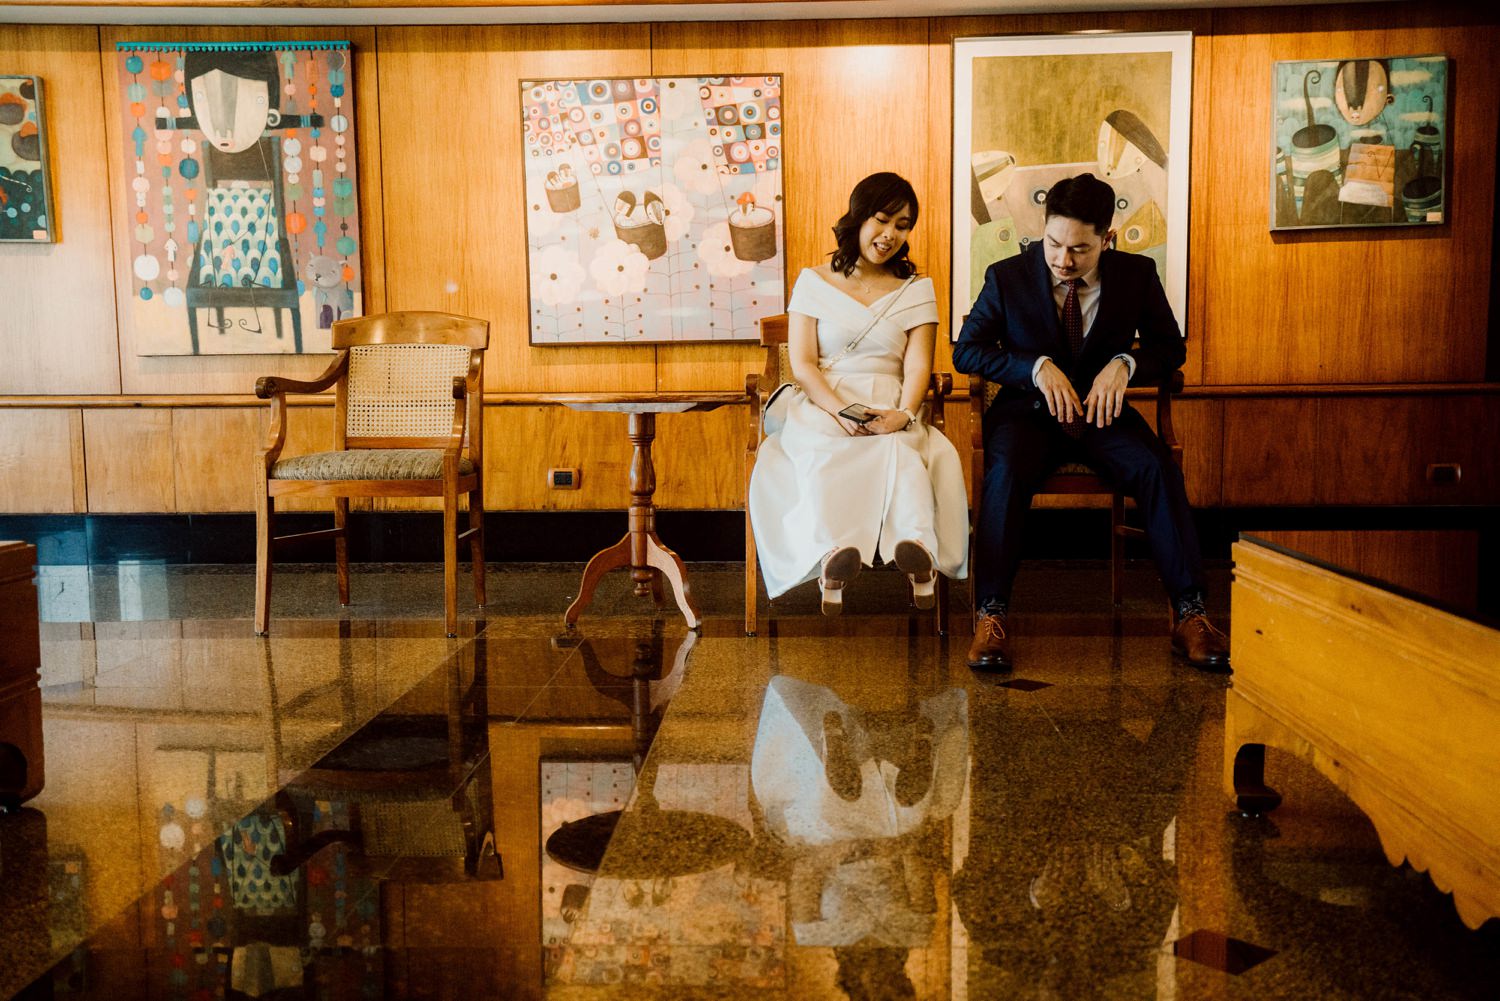 Oak St. Studios - Claud and Liz Intimate Civil Wedding Philippines Photographer 